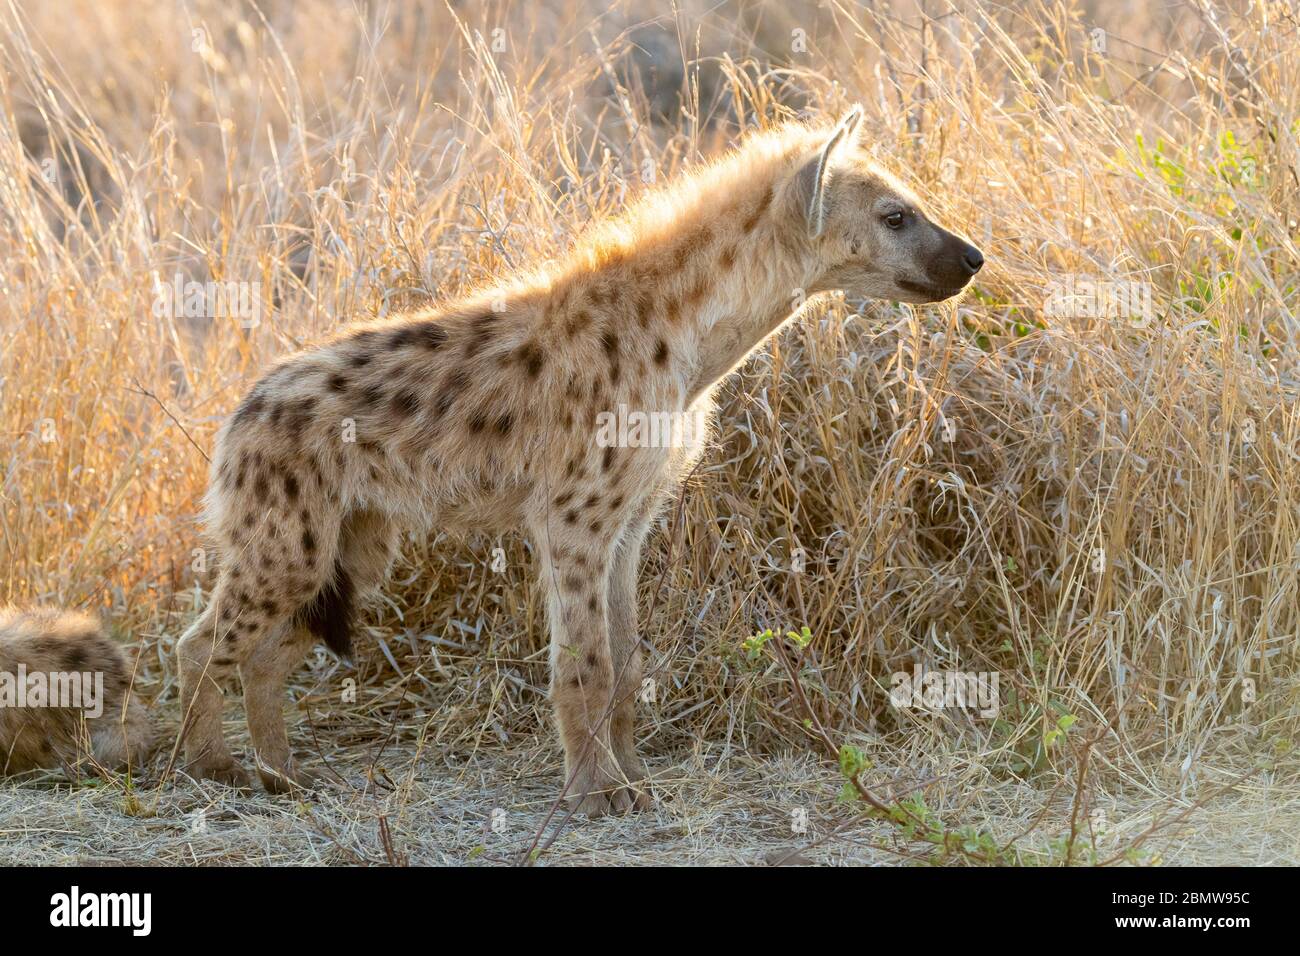 Spotted Hyena (Crocuta crocuta), a cub standing on the ground, Mpumalanga, South Africa Stock Photo